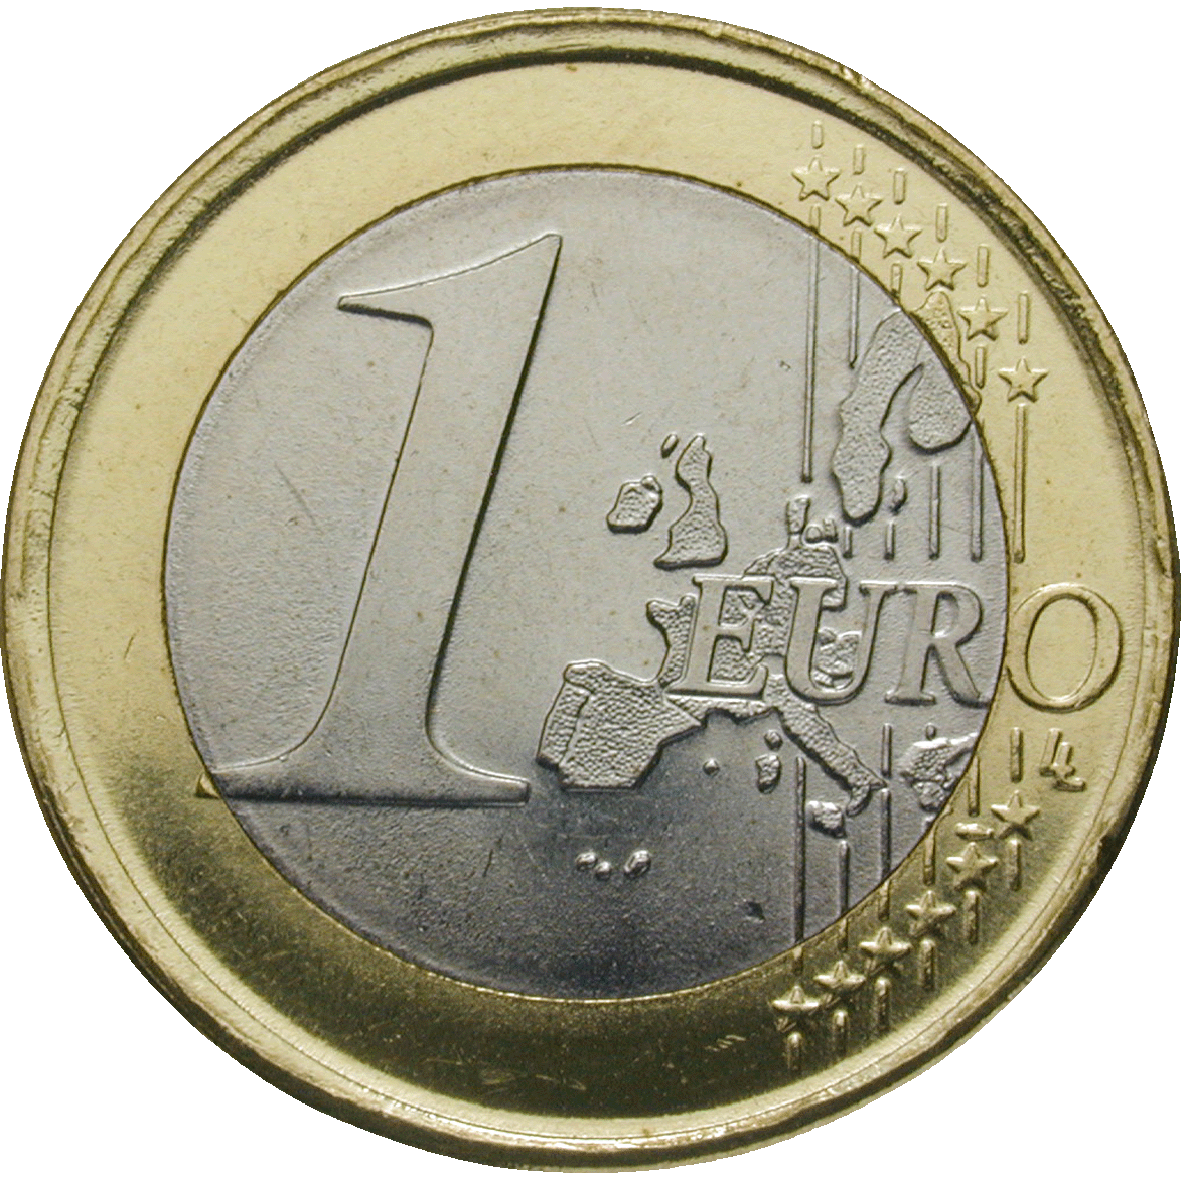 Republic of Portugal, 1 Euro 2002 (obverse)